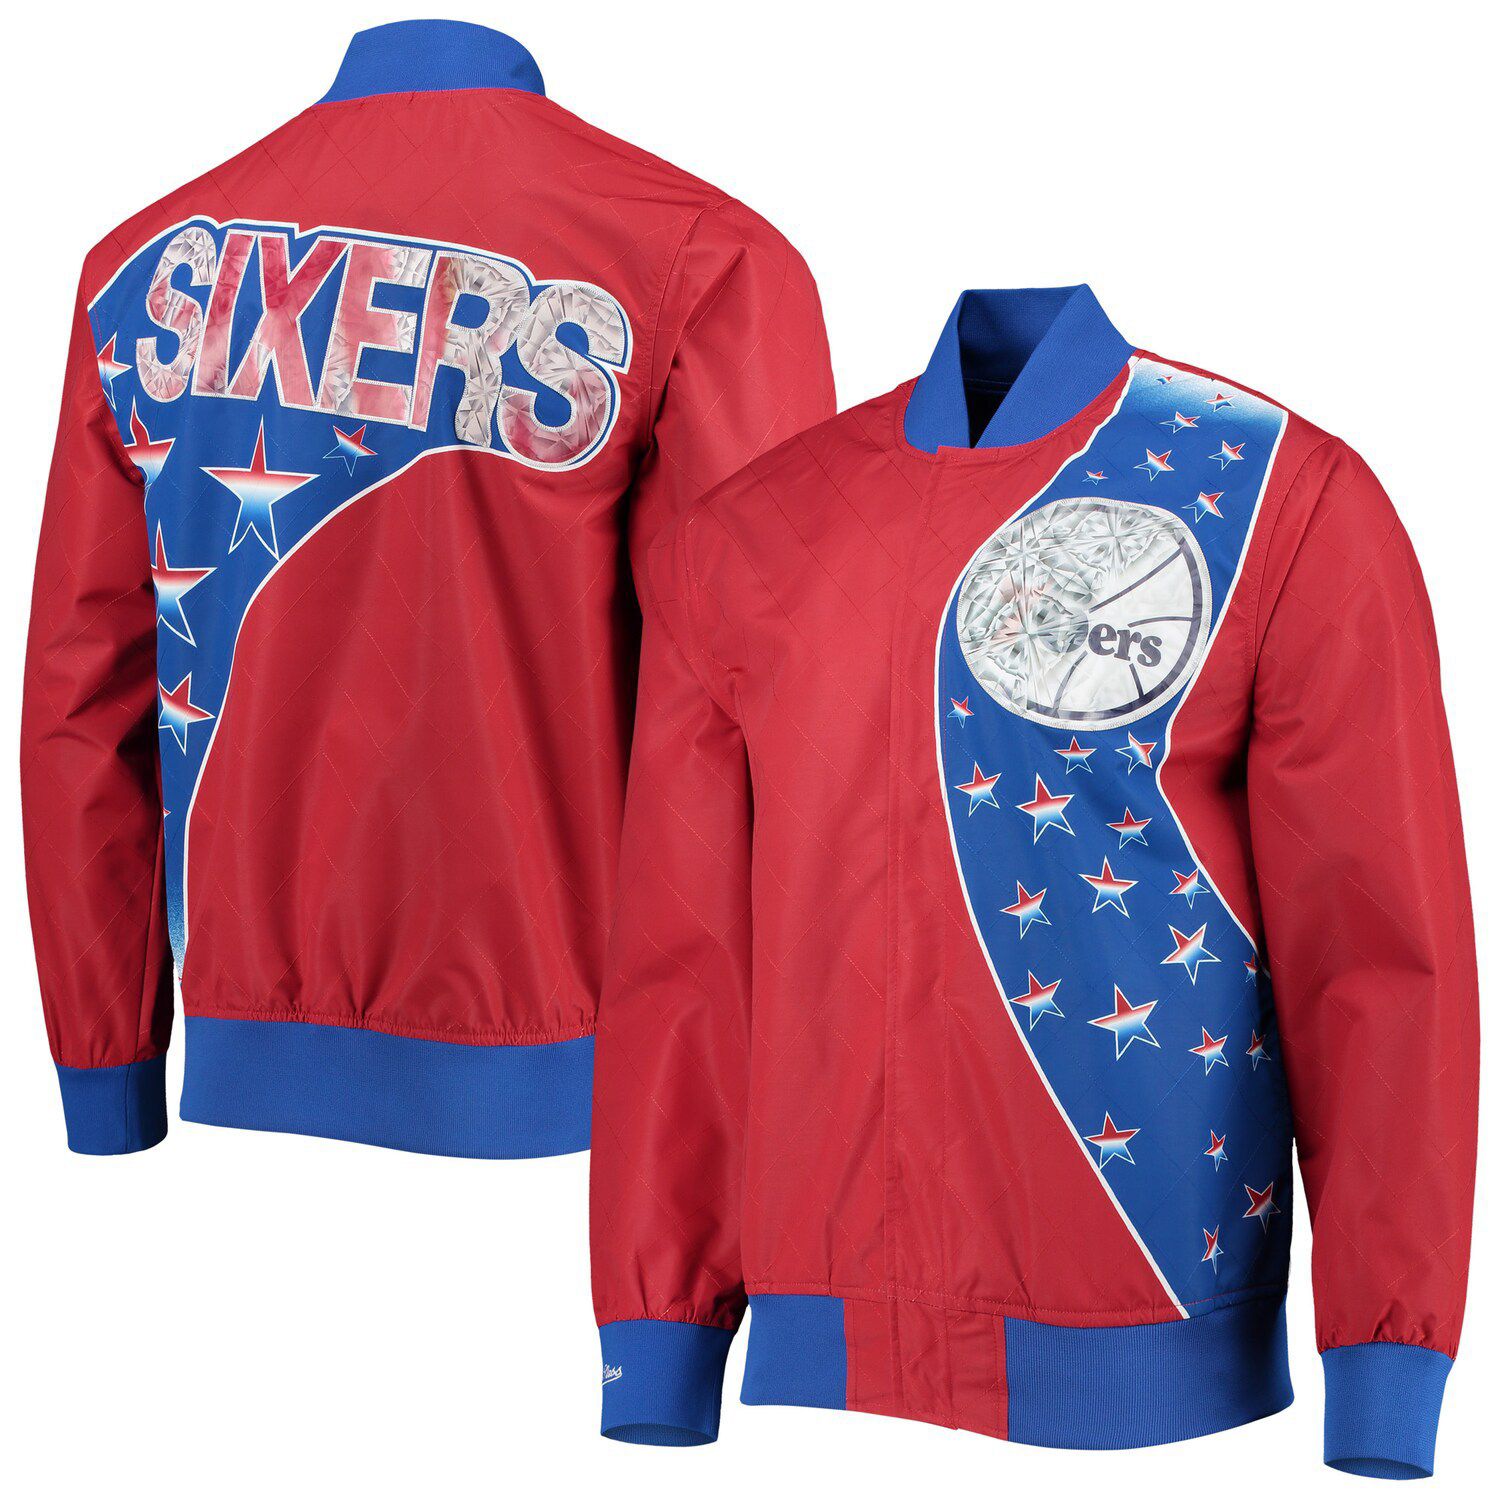 Men's Mitchell & Ness Magic Johnson Navy USA Basketball 1992 Dream Team Authentic Warm-Up Jacket